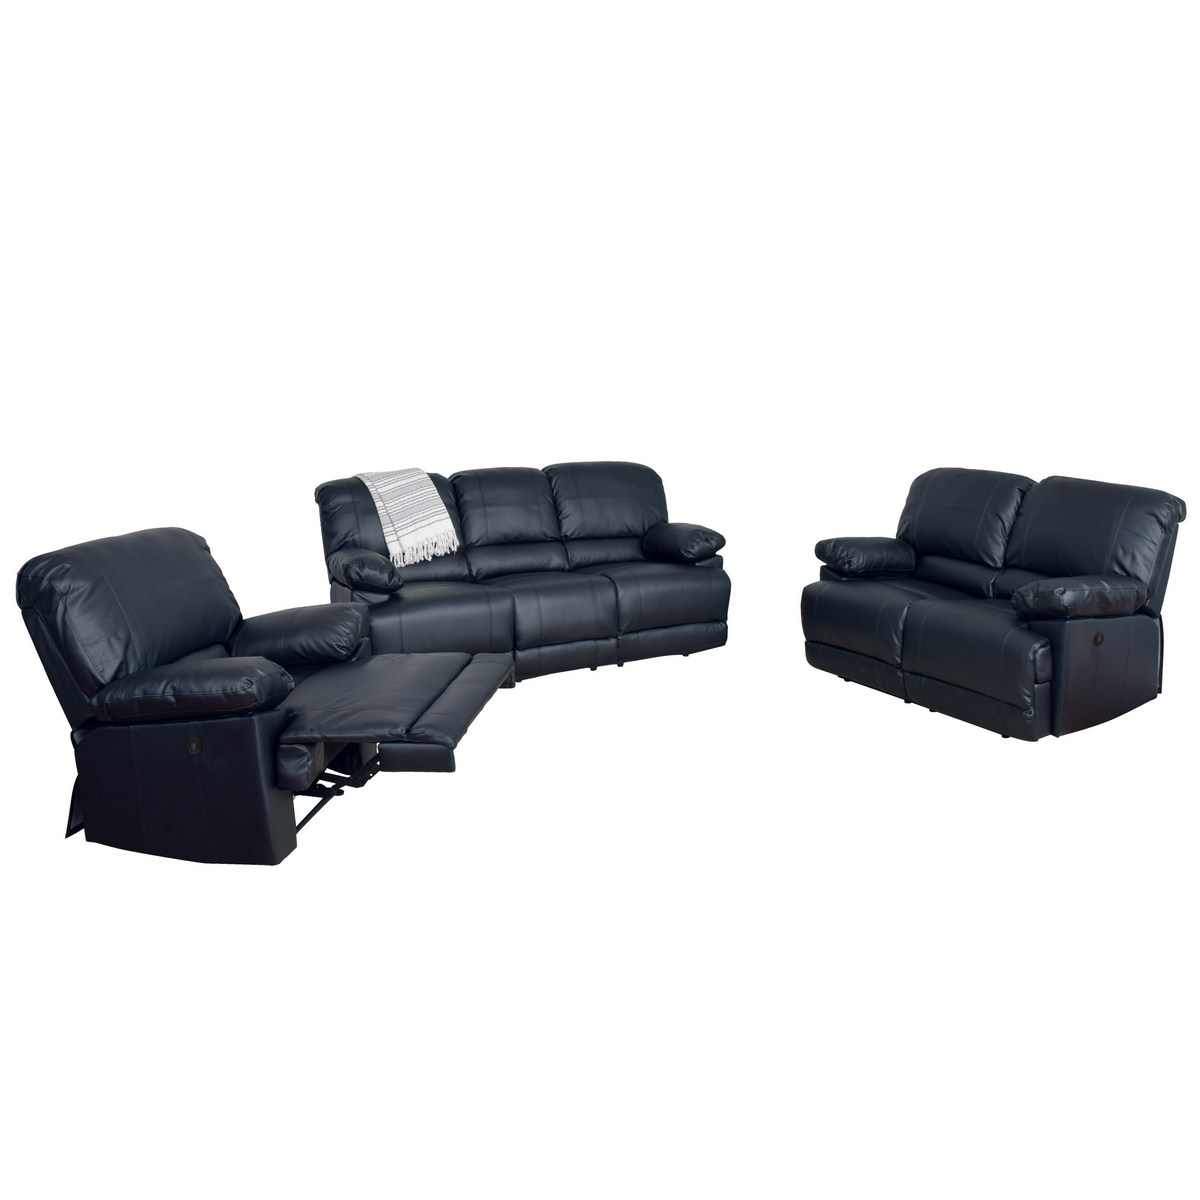 Corliving Lzy-302-z1 Lea Black Bonded Leather Power Recliner 3pc Sofa & Chair Set